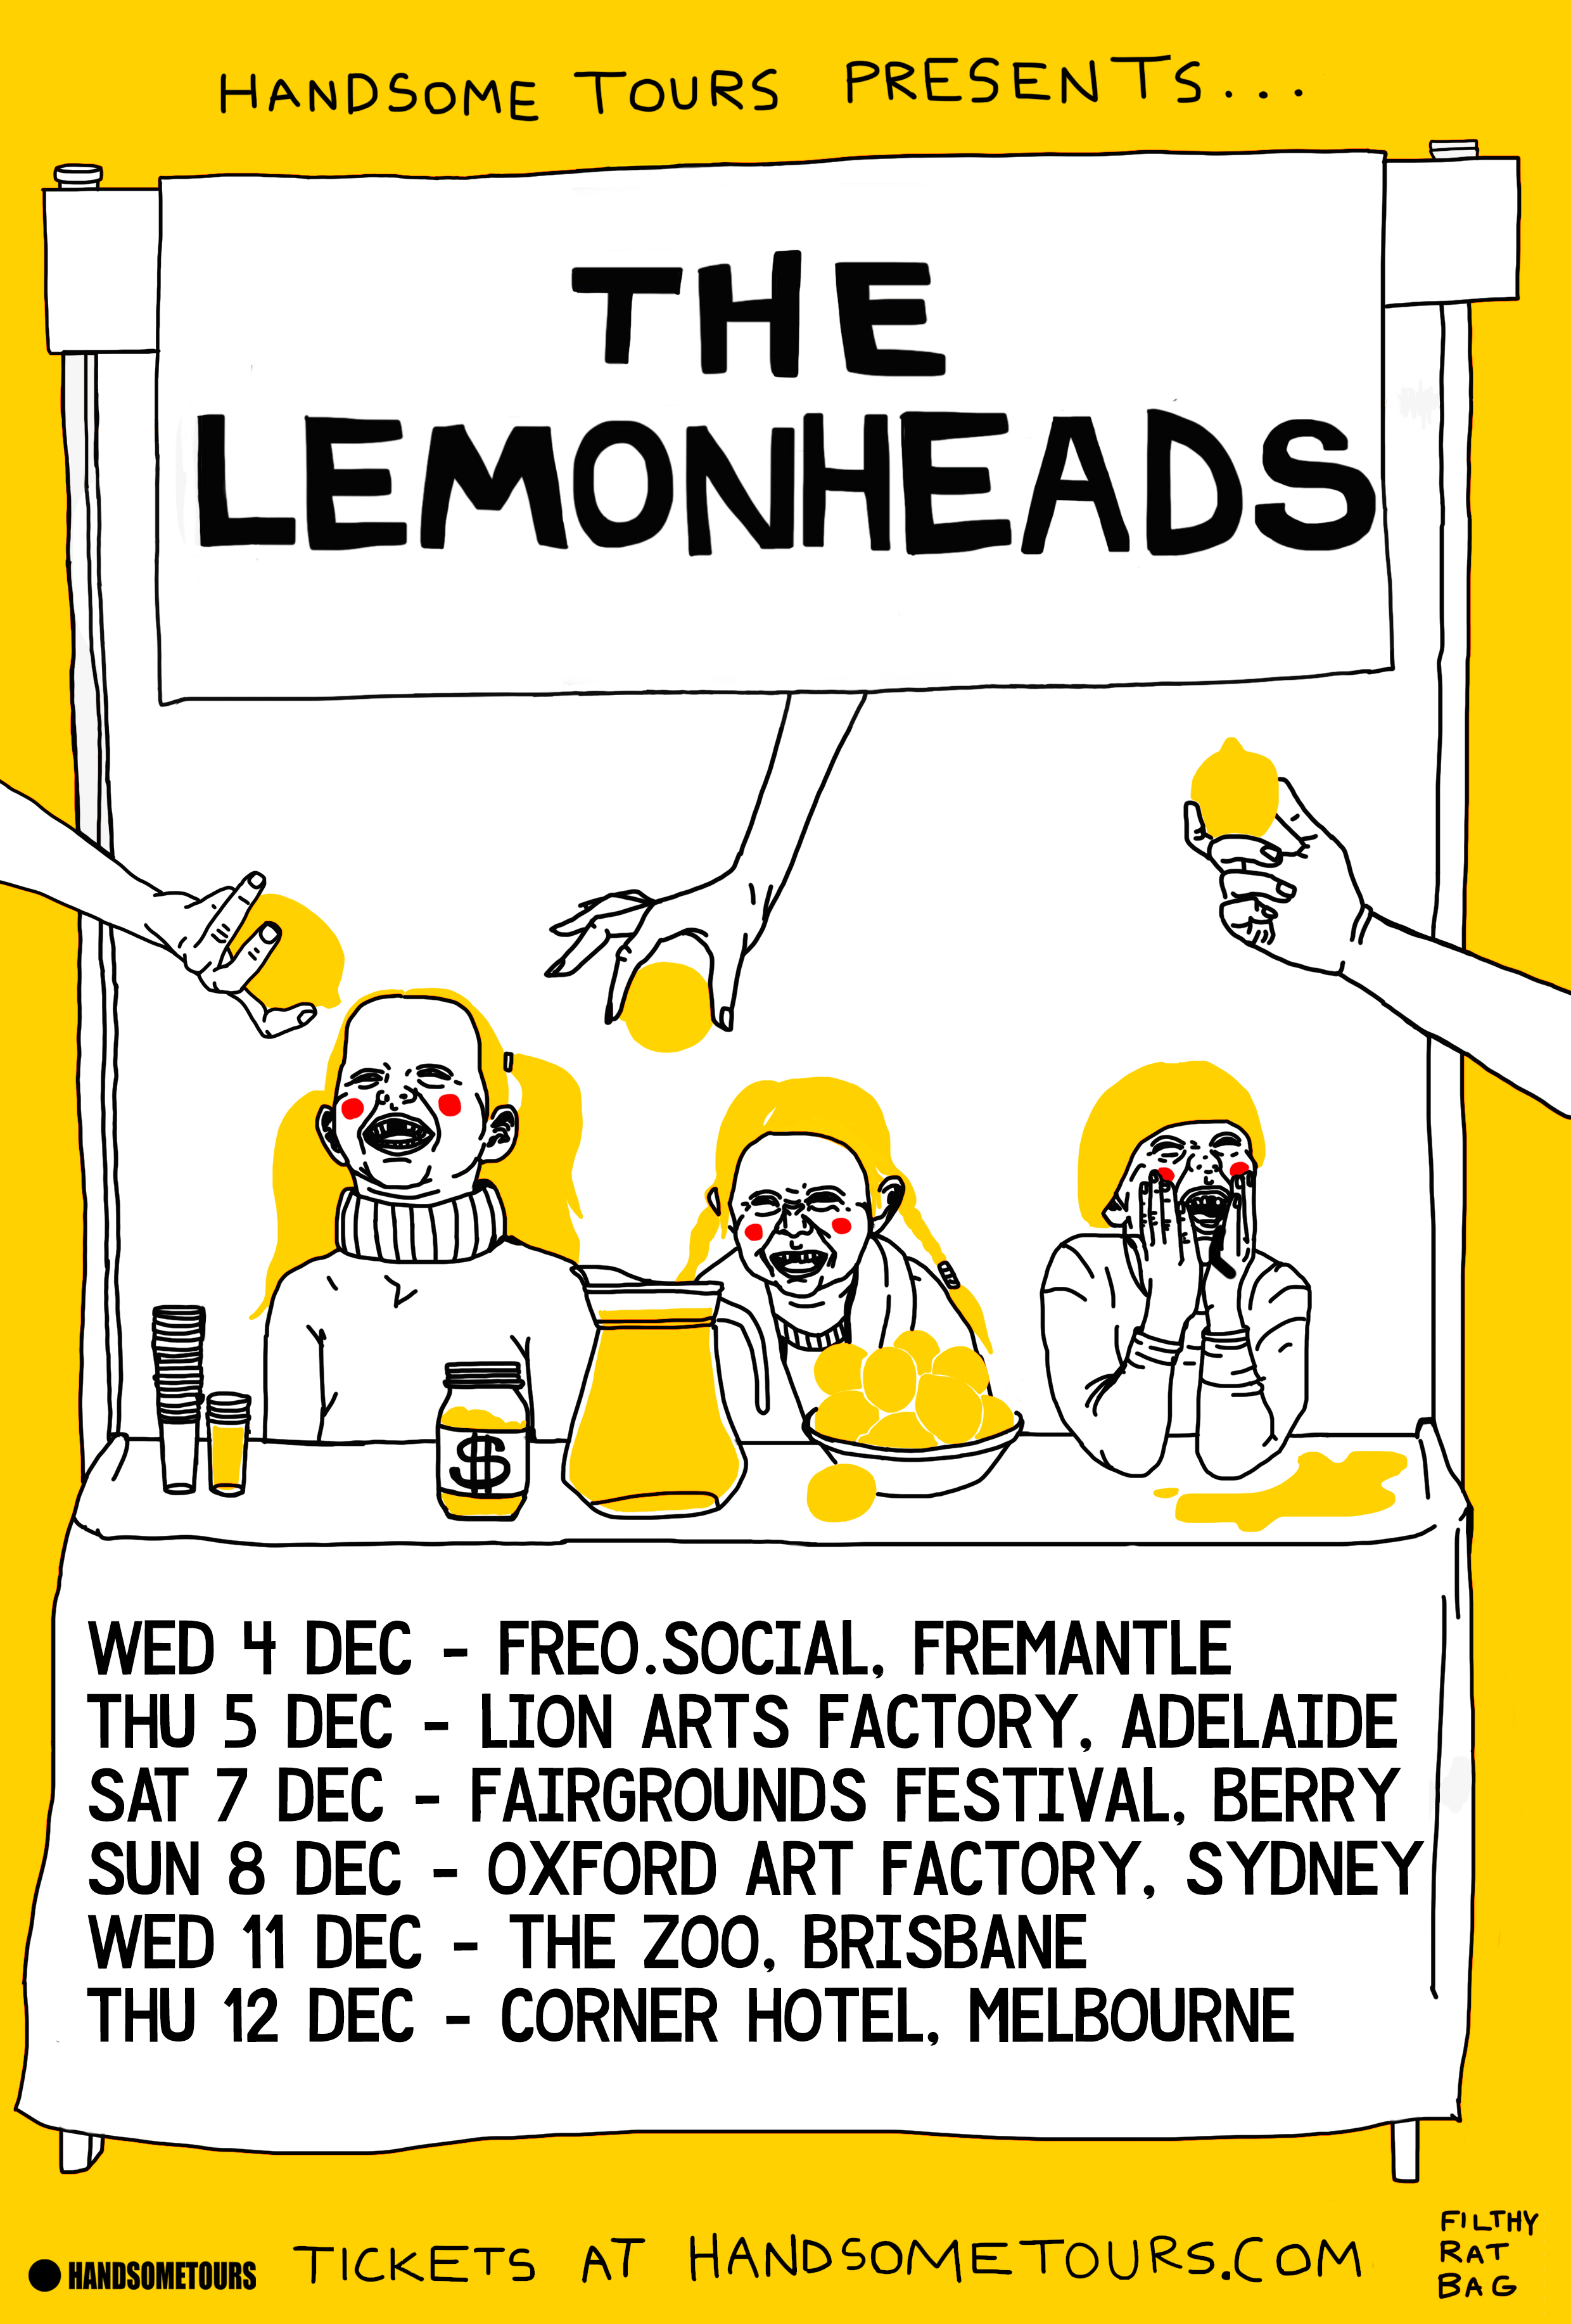 https://handsometours.com/wp-content/uploads/2019/09/Lemonheads_MAIN-ART.png